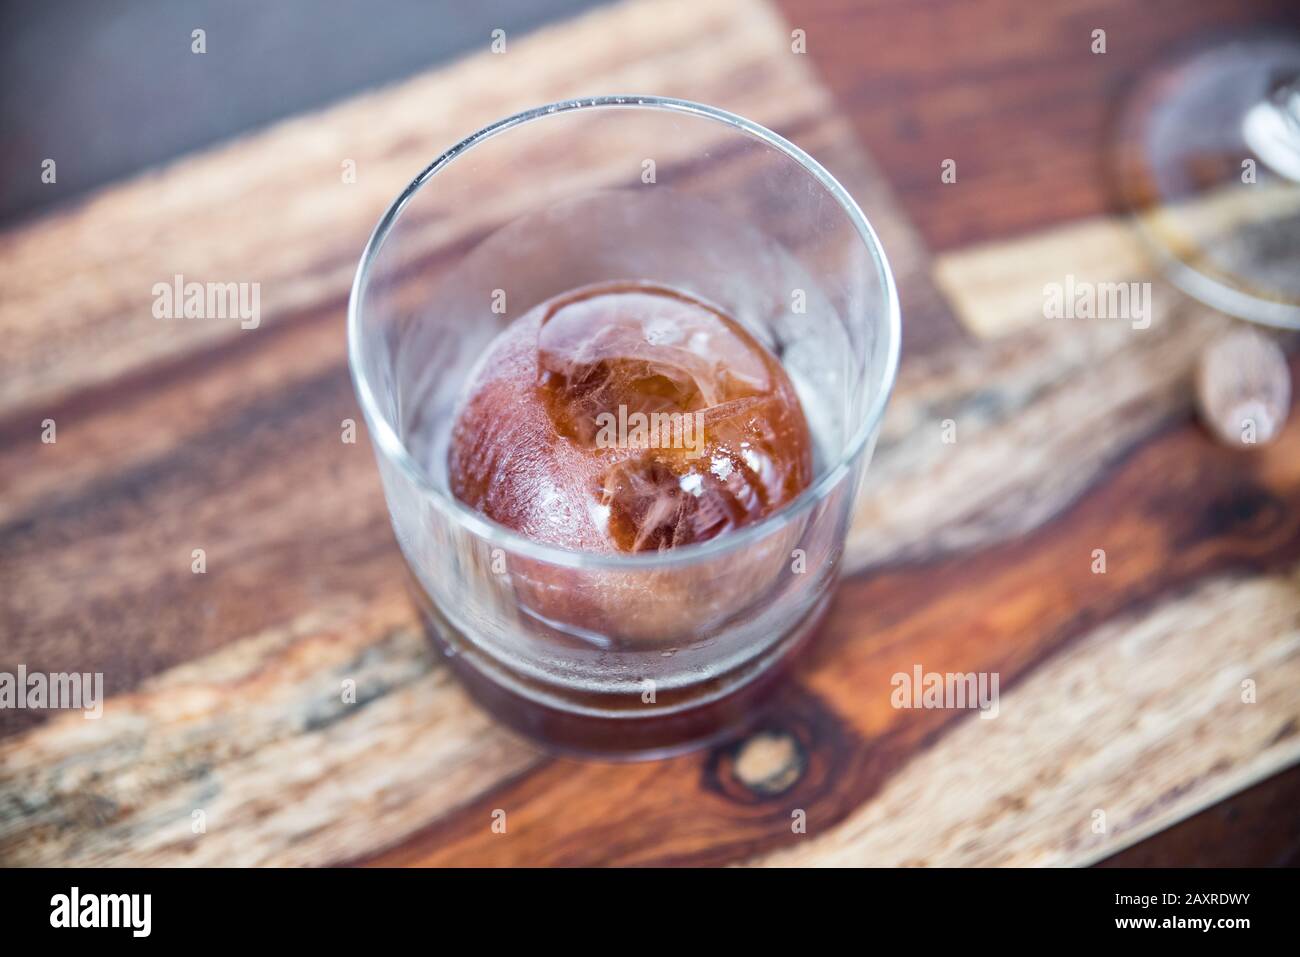 https://c8.alamy.com/comp/2AXRDWY/whiskey-or-scotch-based-cocktail-with-designer-round-ice-cube-2AXRDWY.jpg